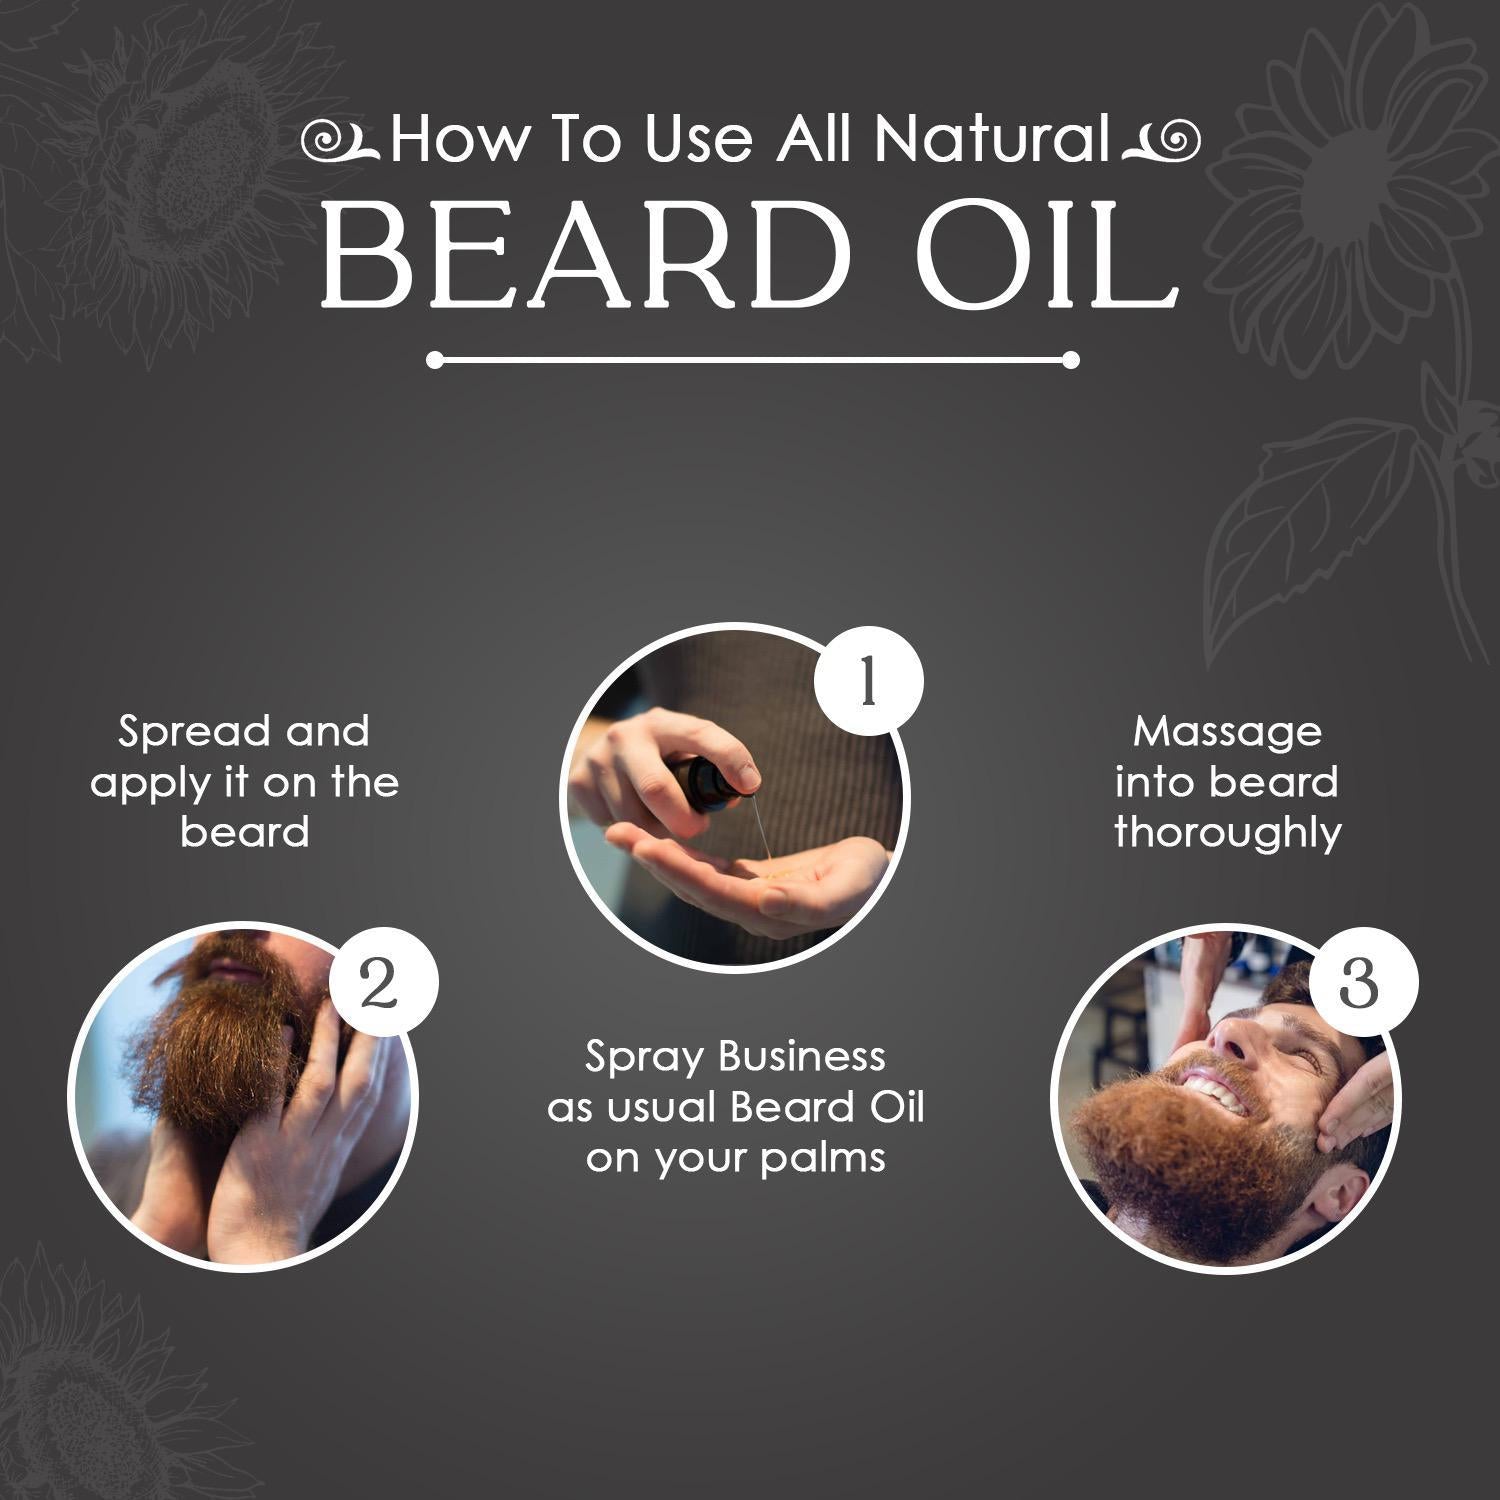 The Man Brand’s Beard Oil for Moisturizing, Grooming Beard and Skin - Natural Vitamin E Beard Care Oil for eliminating beardruff, patchy beards, and dry skin